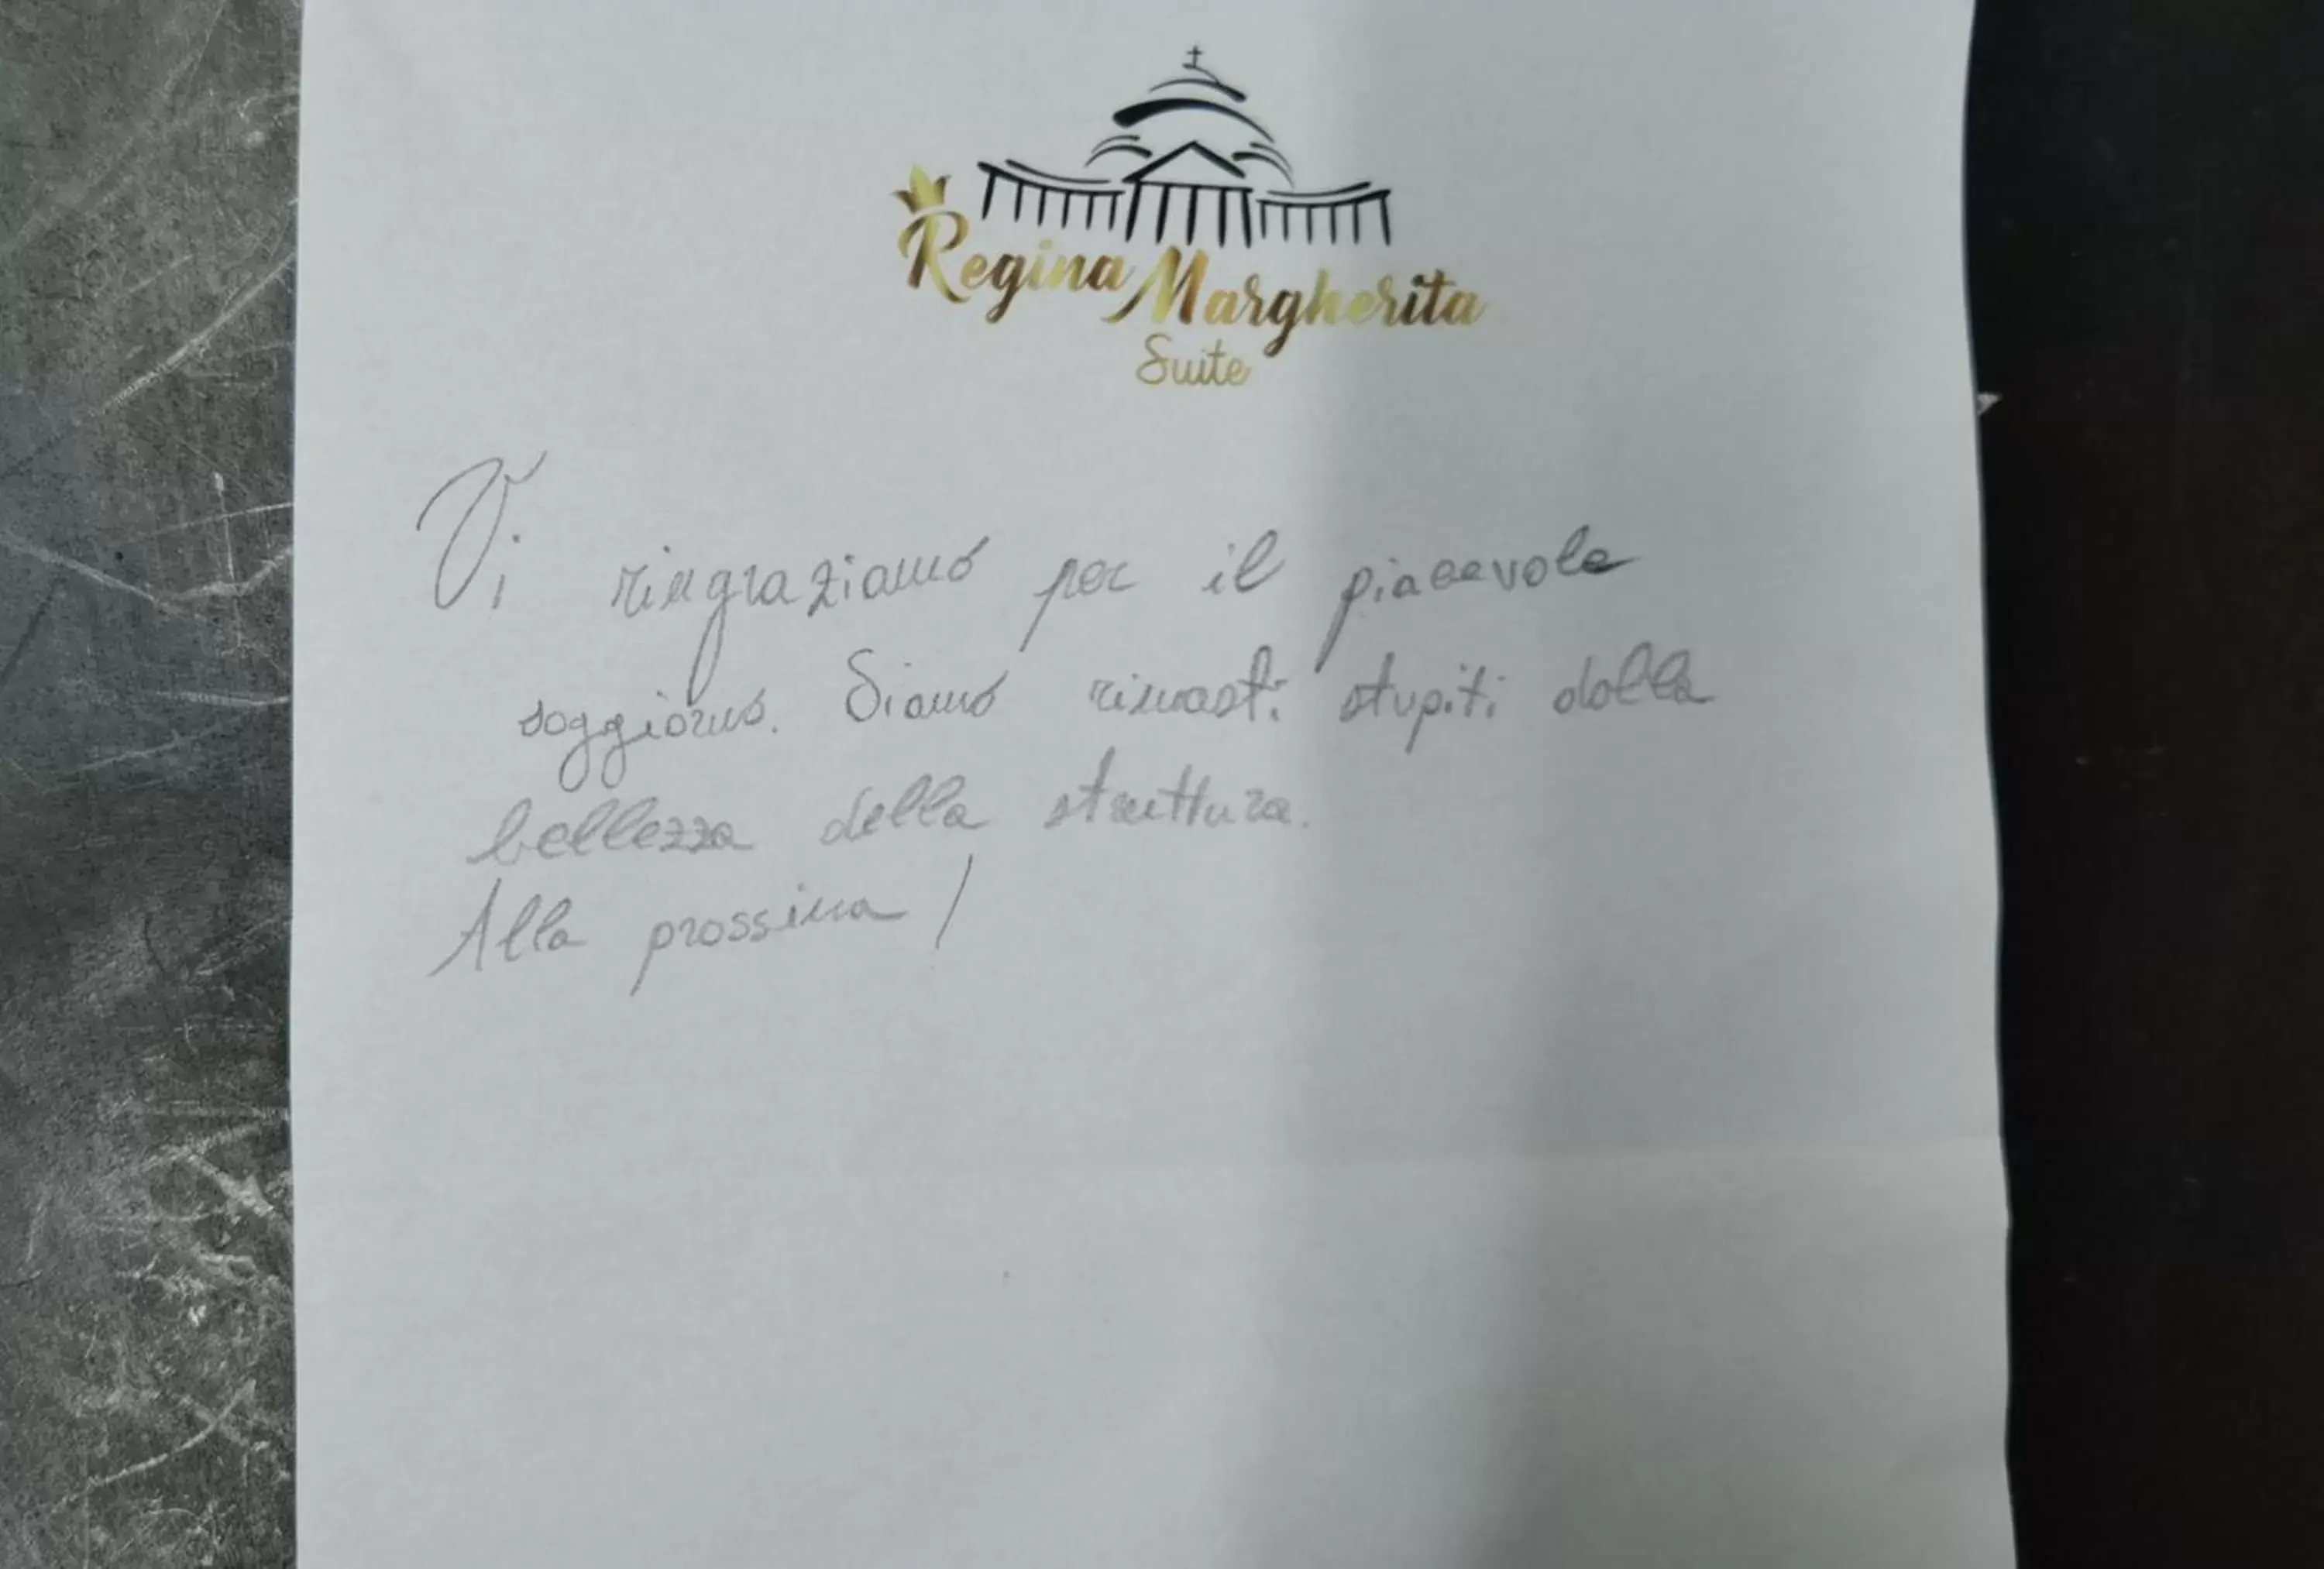 Logo/Certificate/Sign in Regina Margherita Suite